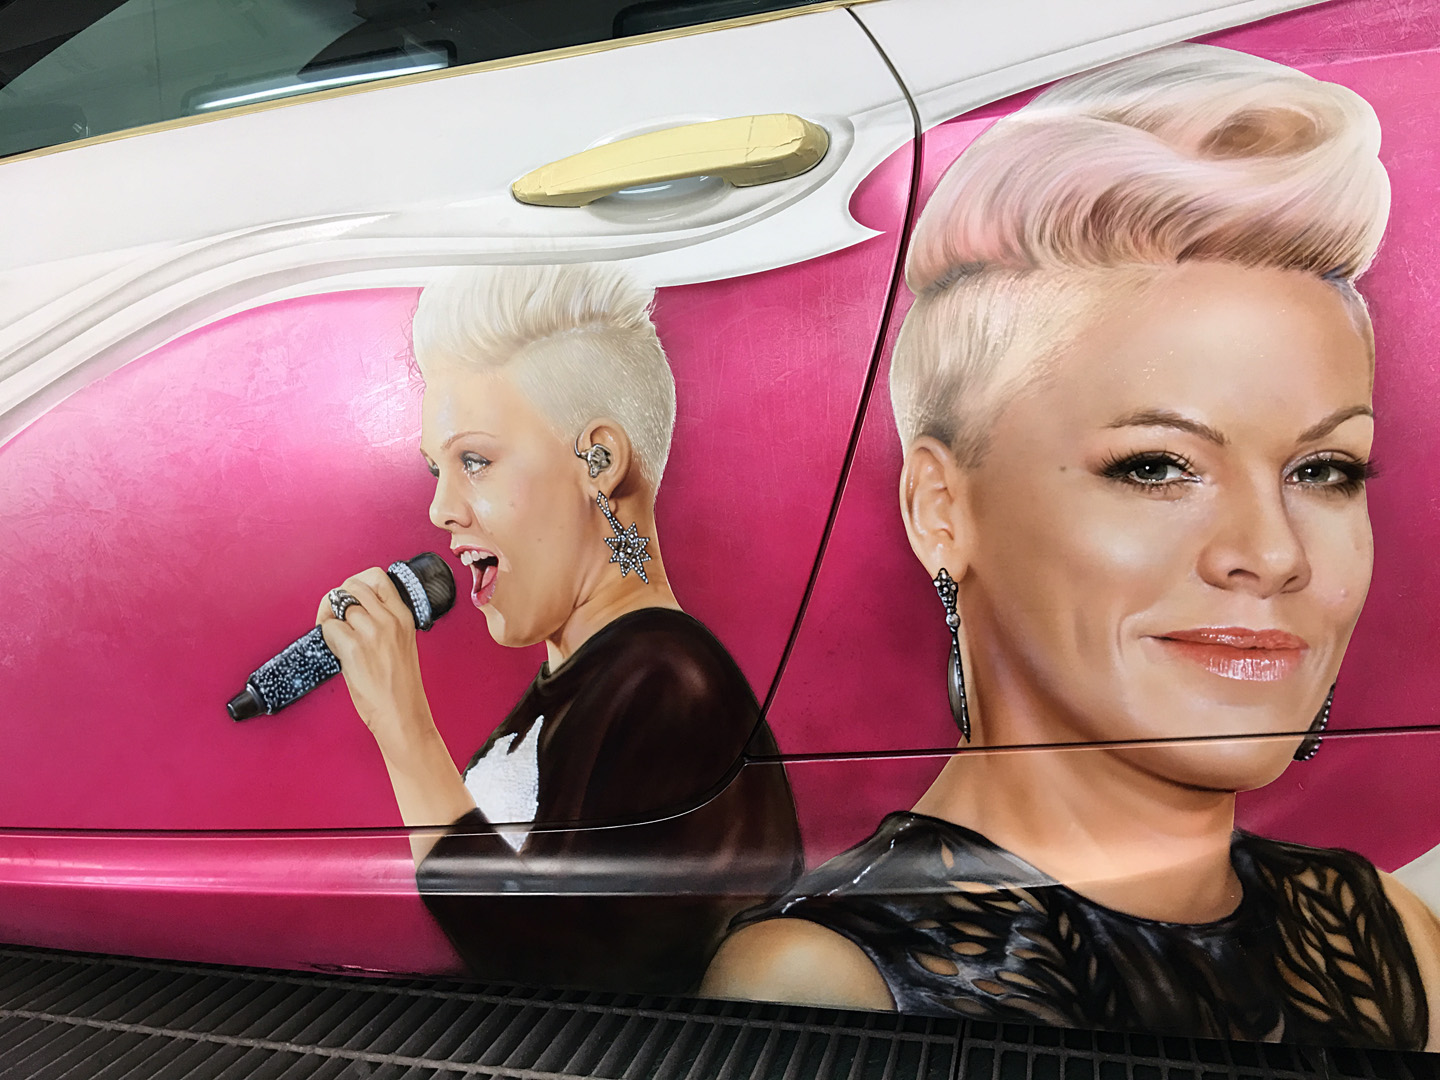 Pink Car 2017